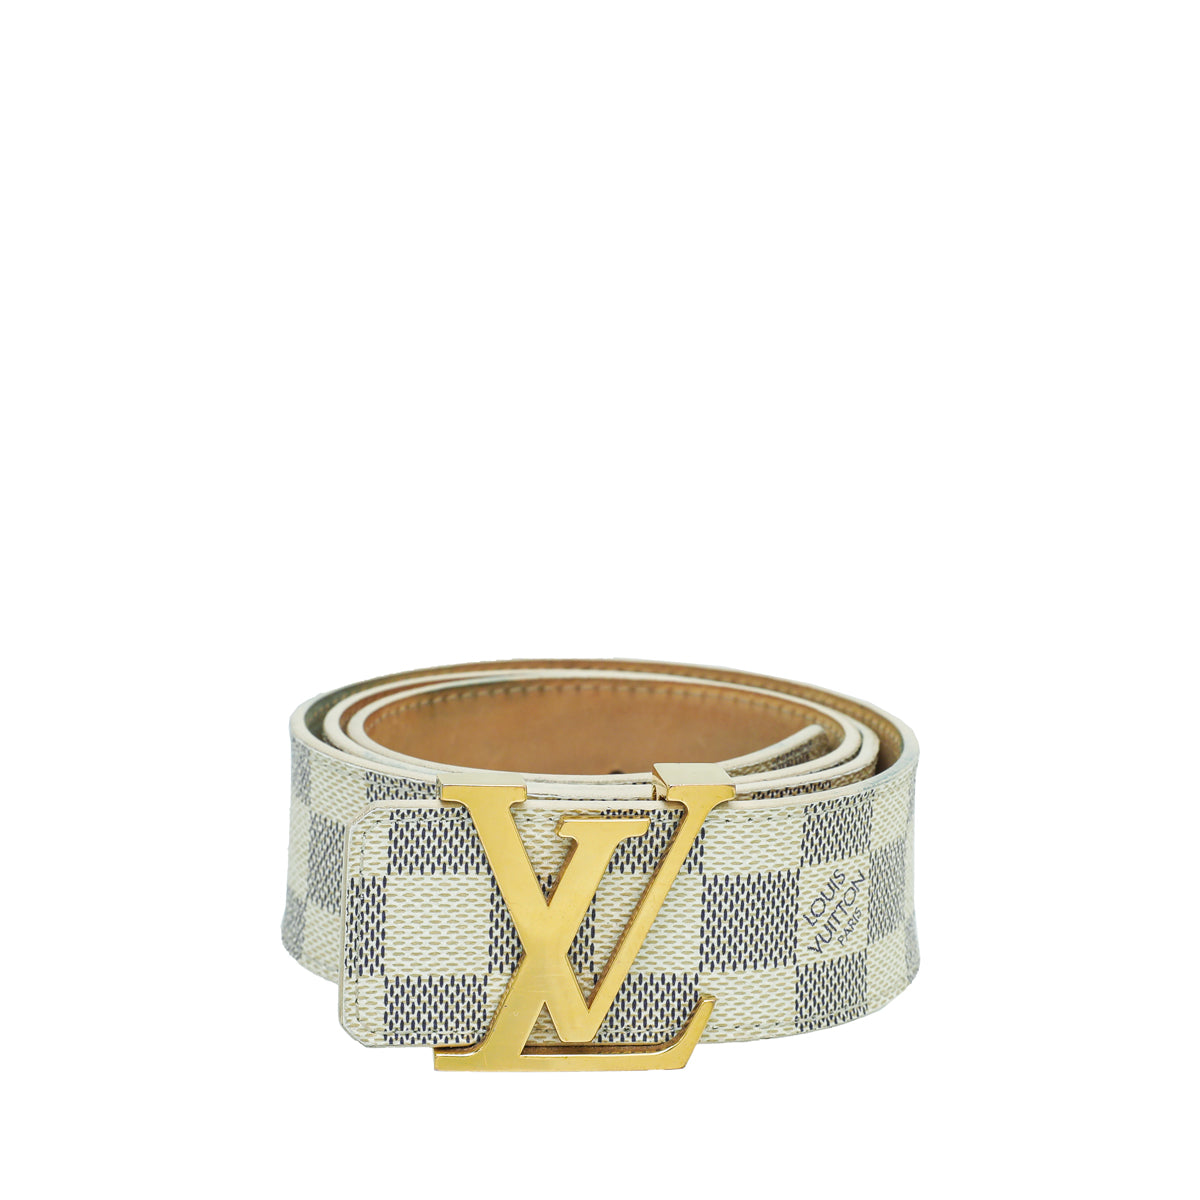 Louis Vuitton Damier Azur Initials LV Logo Belt Size 85/34